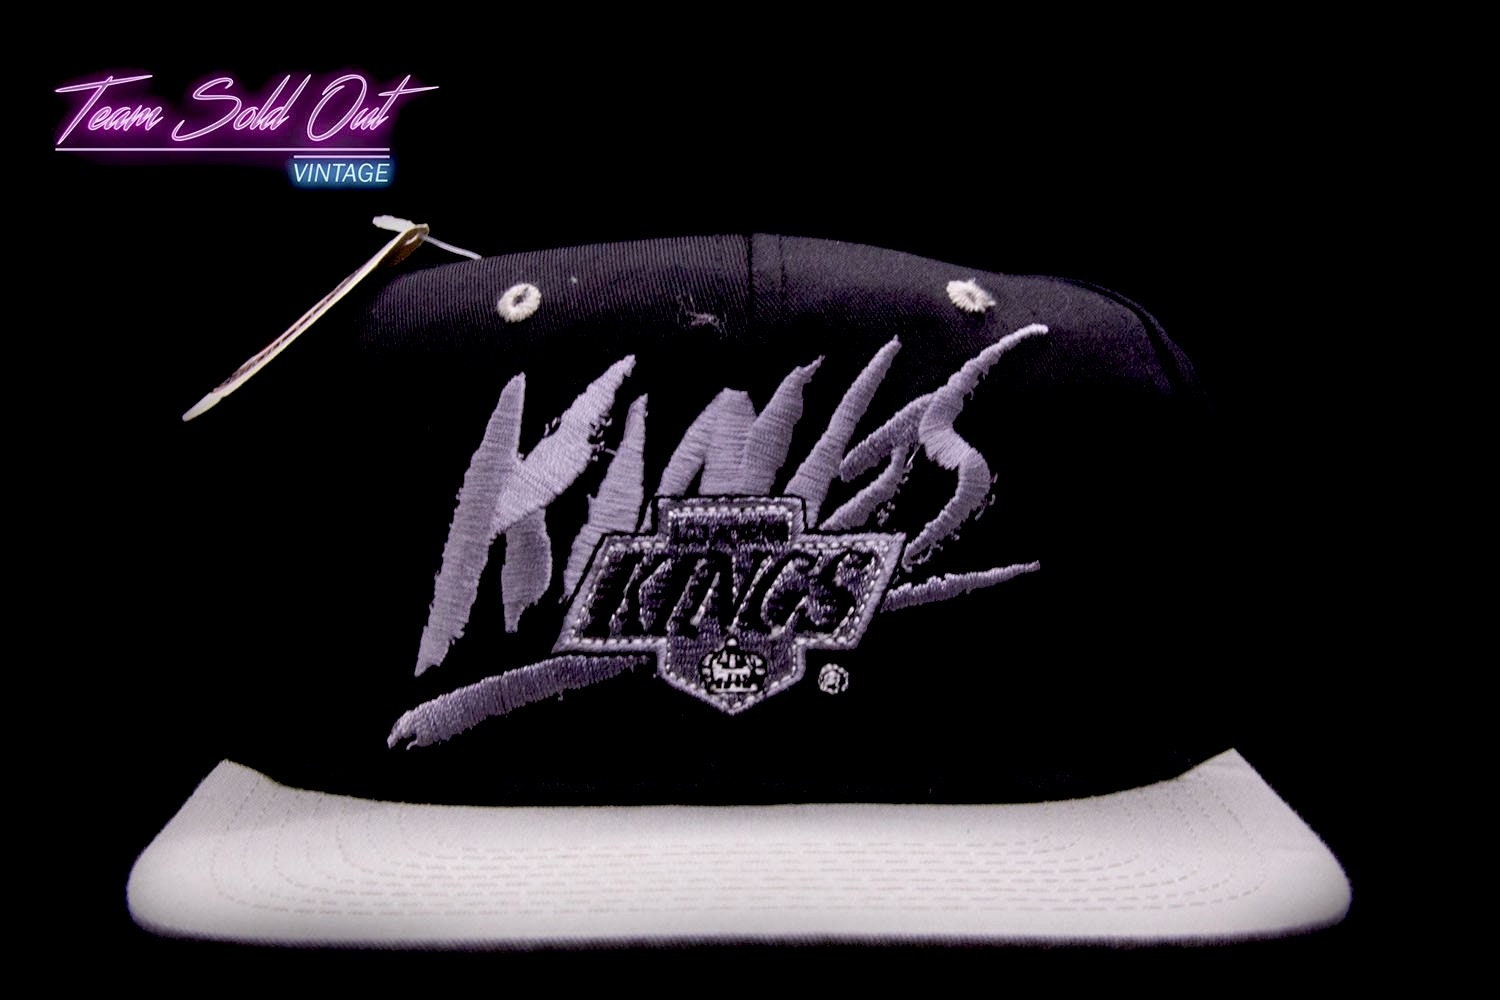 stake Out LA Kings vintage grey cap Reference : 3603